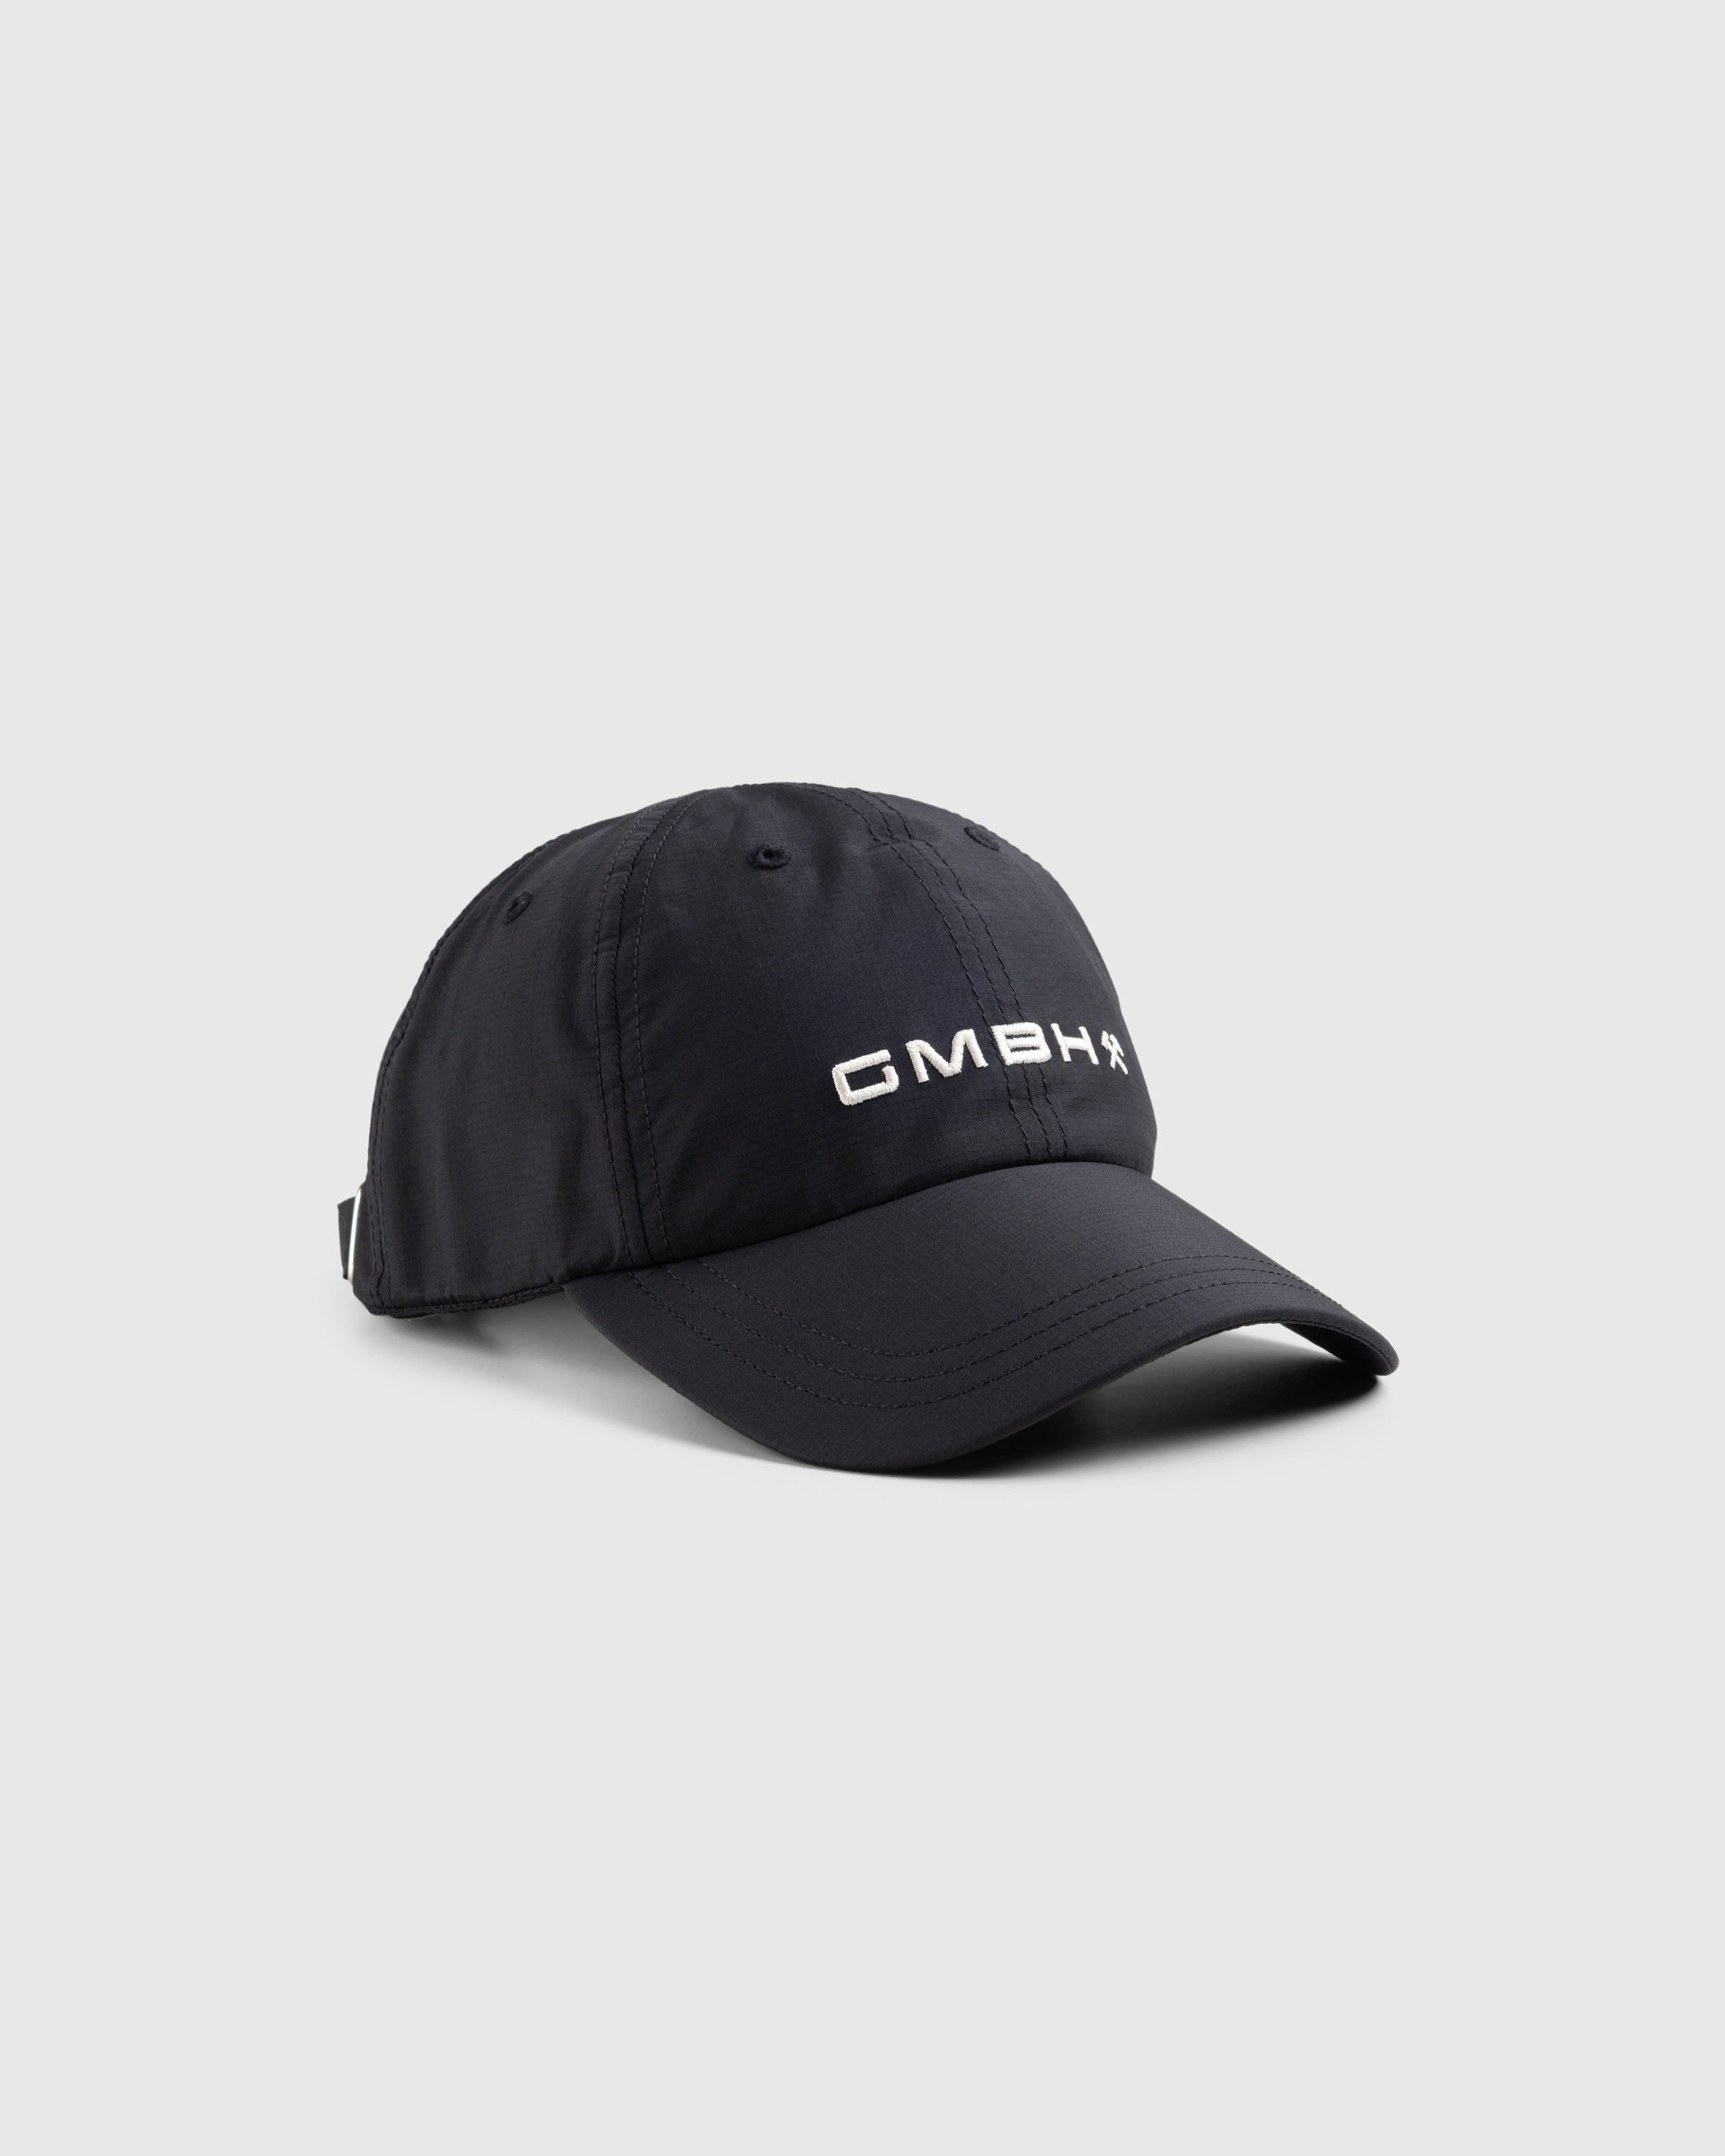 GmbH - Sahil Baseball Cap Black - Accessories - Black - Image 1